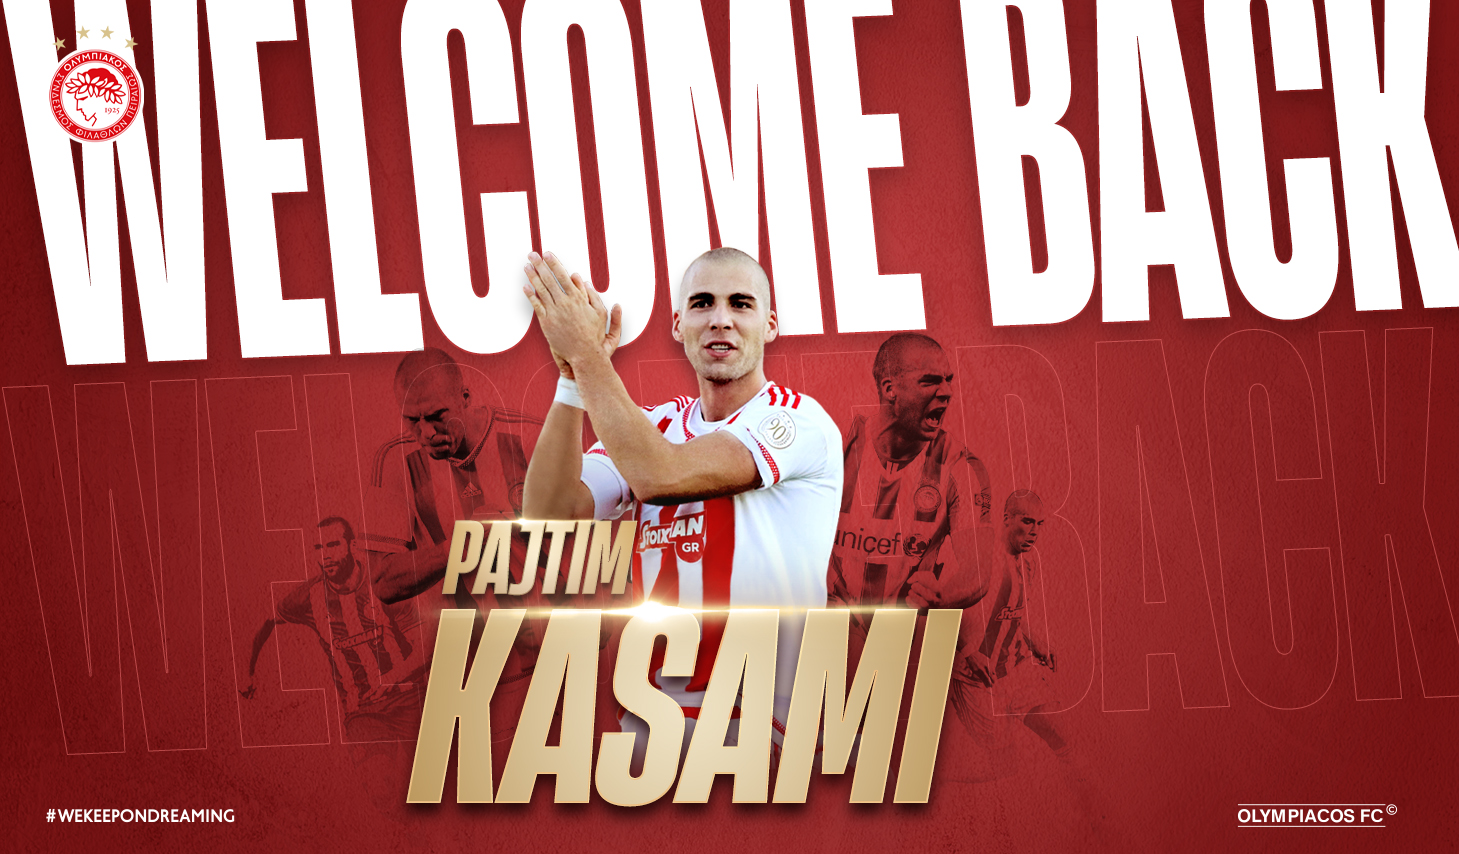 Kasami returns to Olympiacos